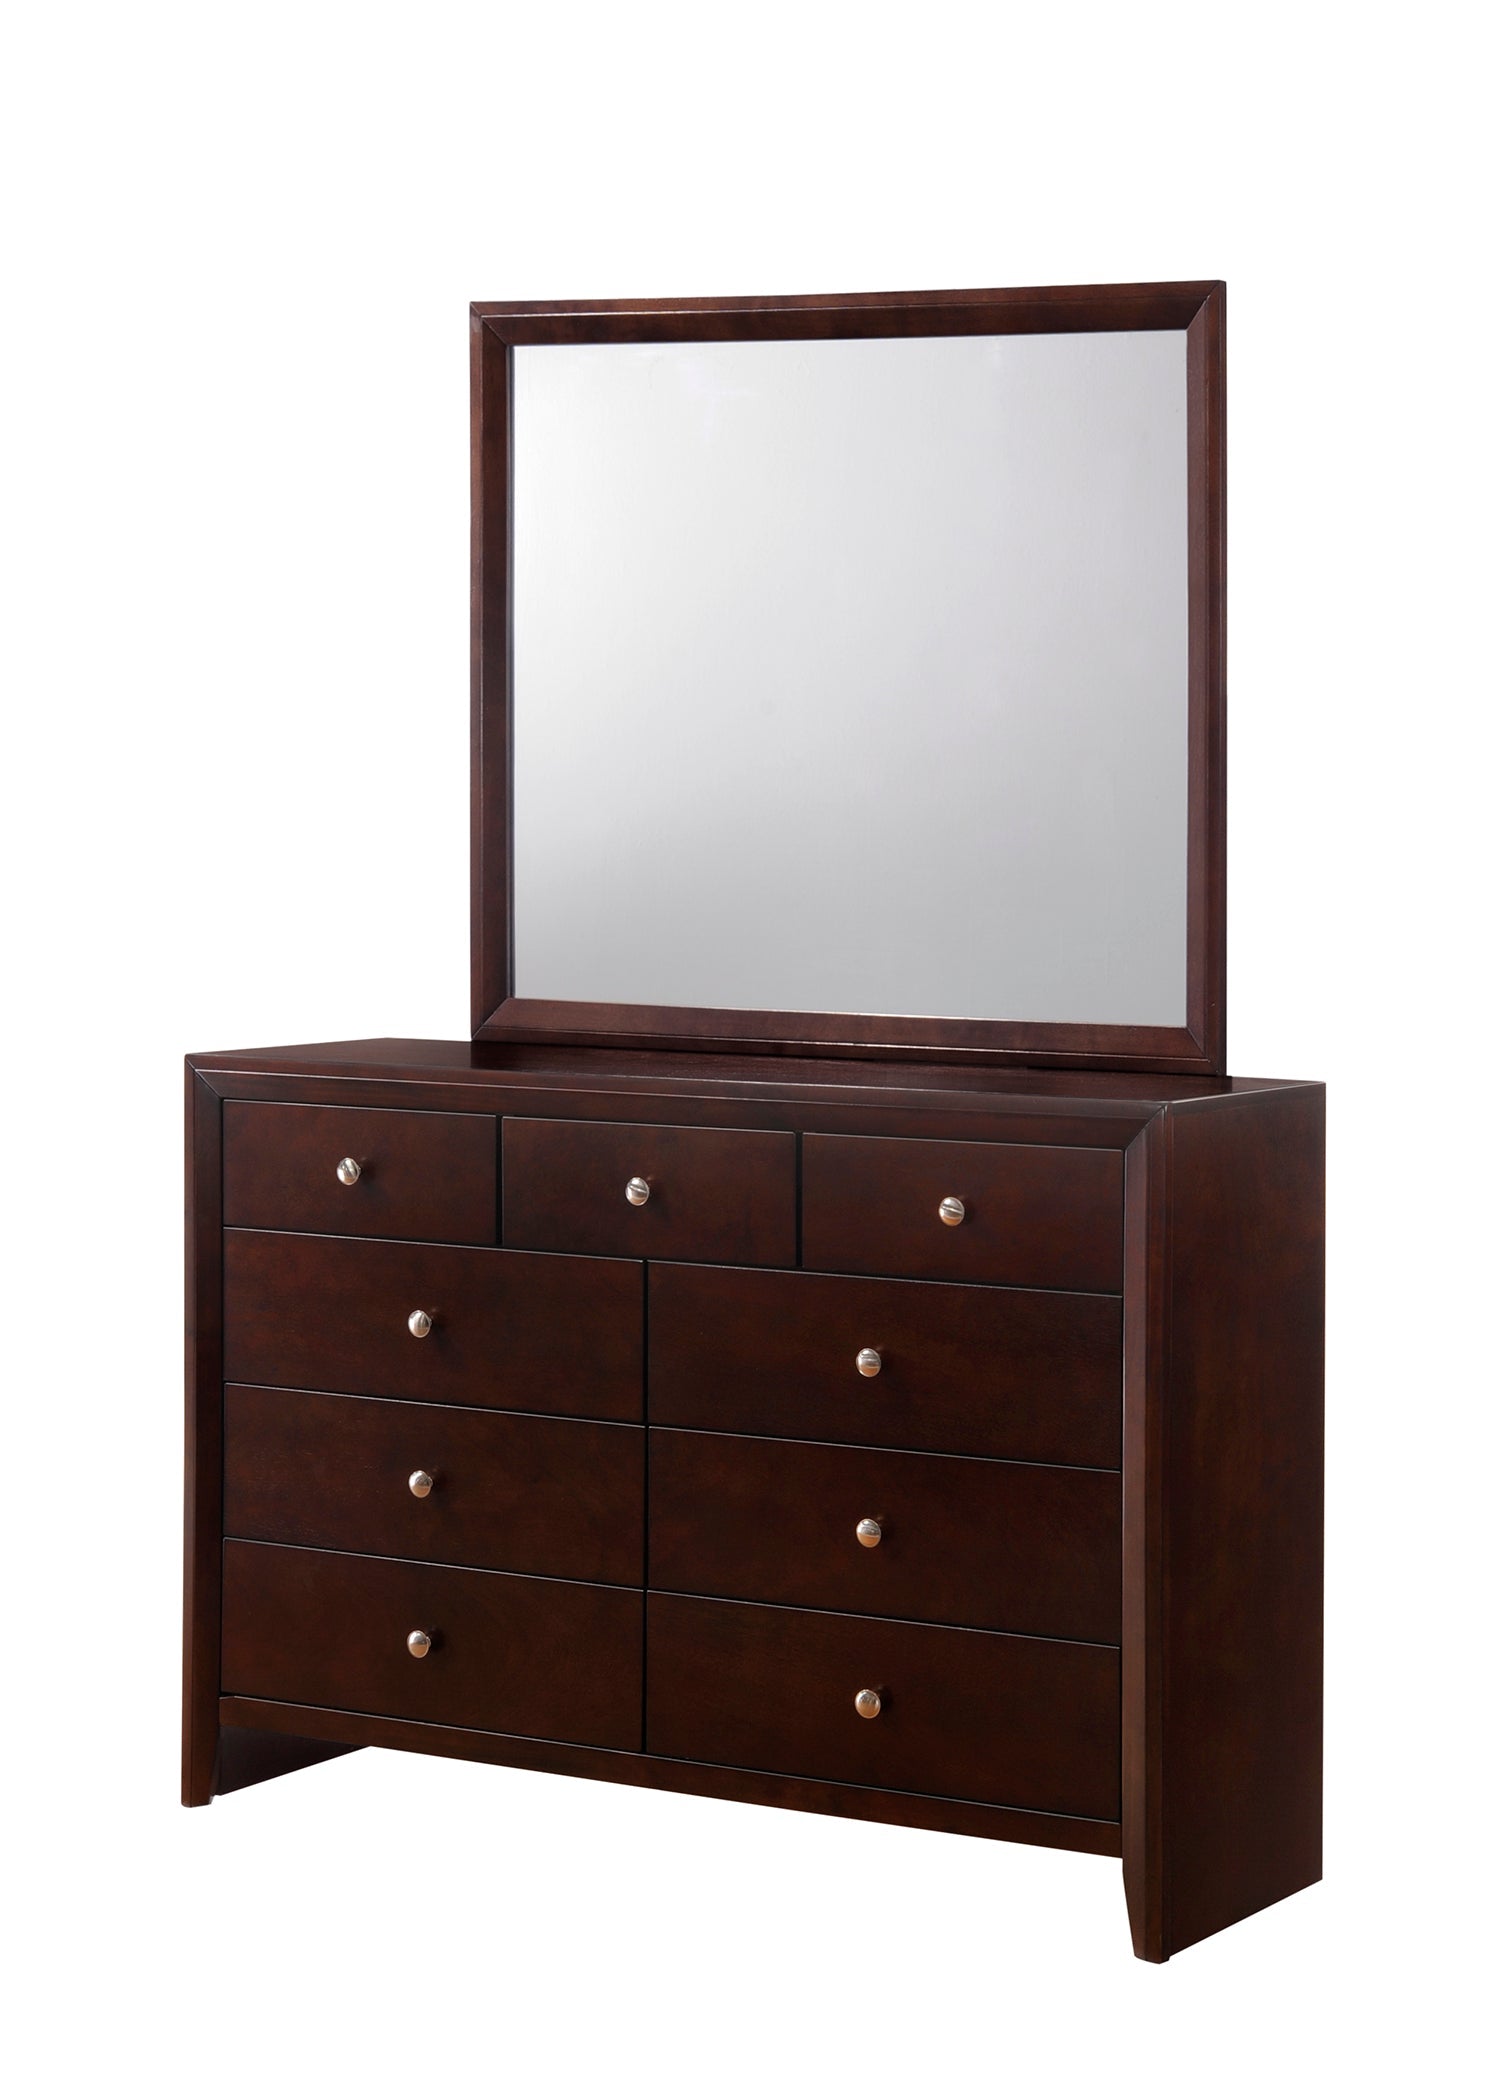 Evan Cherry Finish Classic And Modern, Cherry Wood Panel Bedroom Set